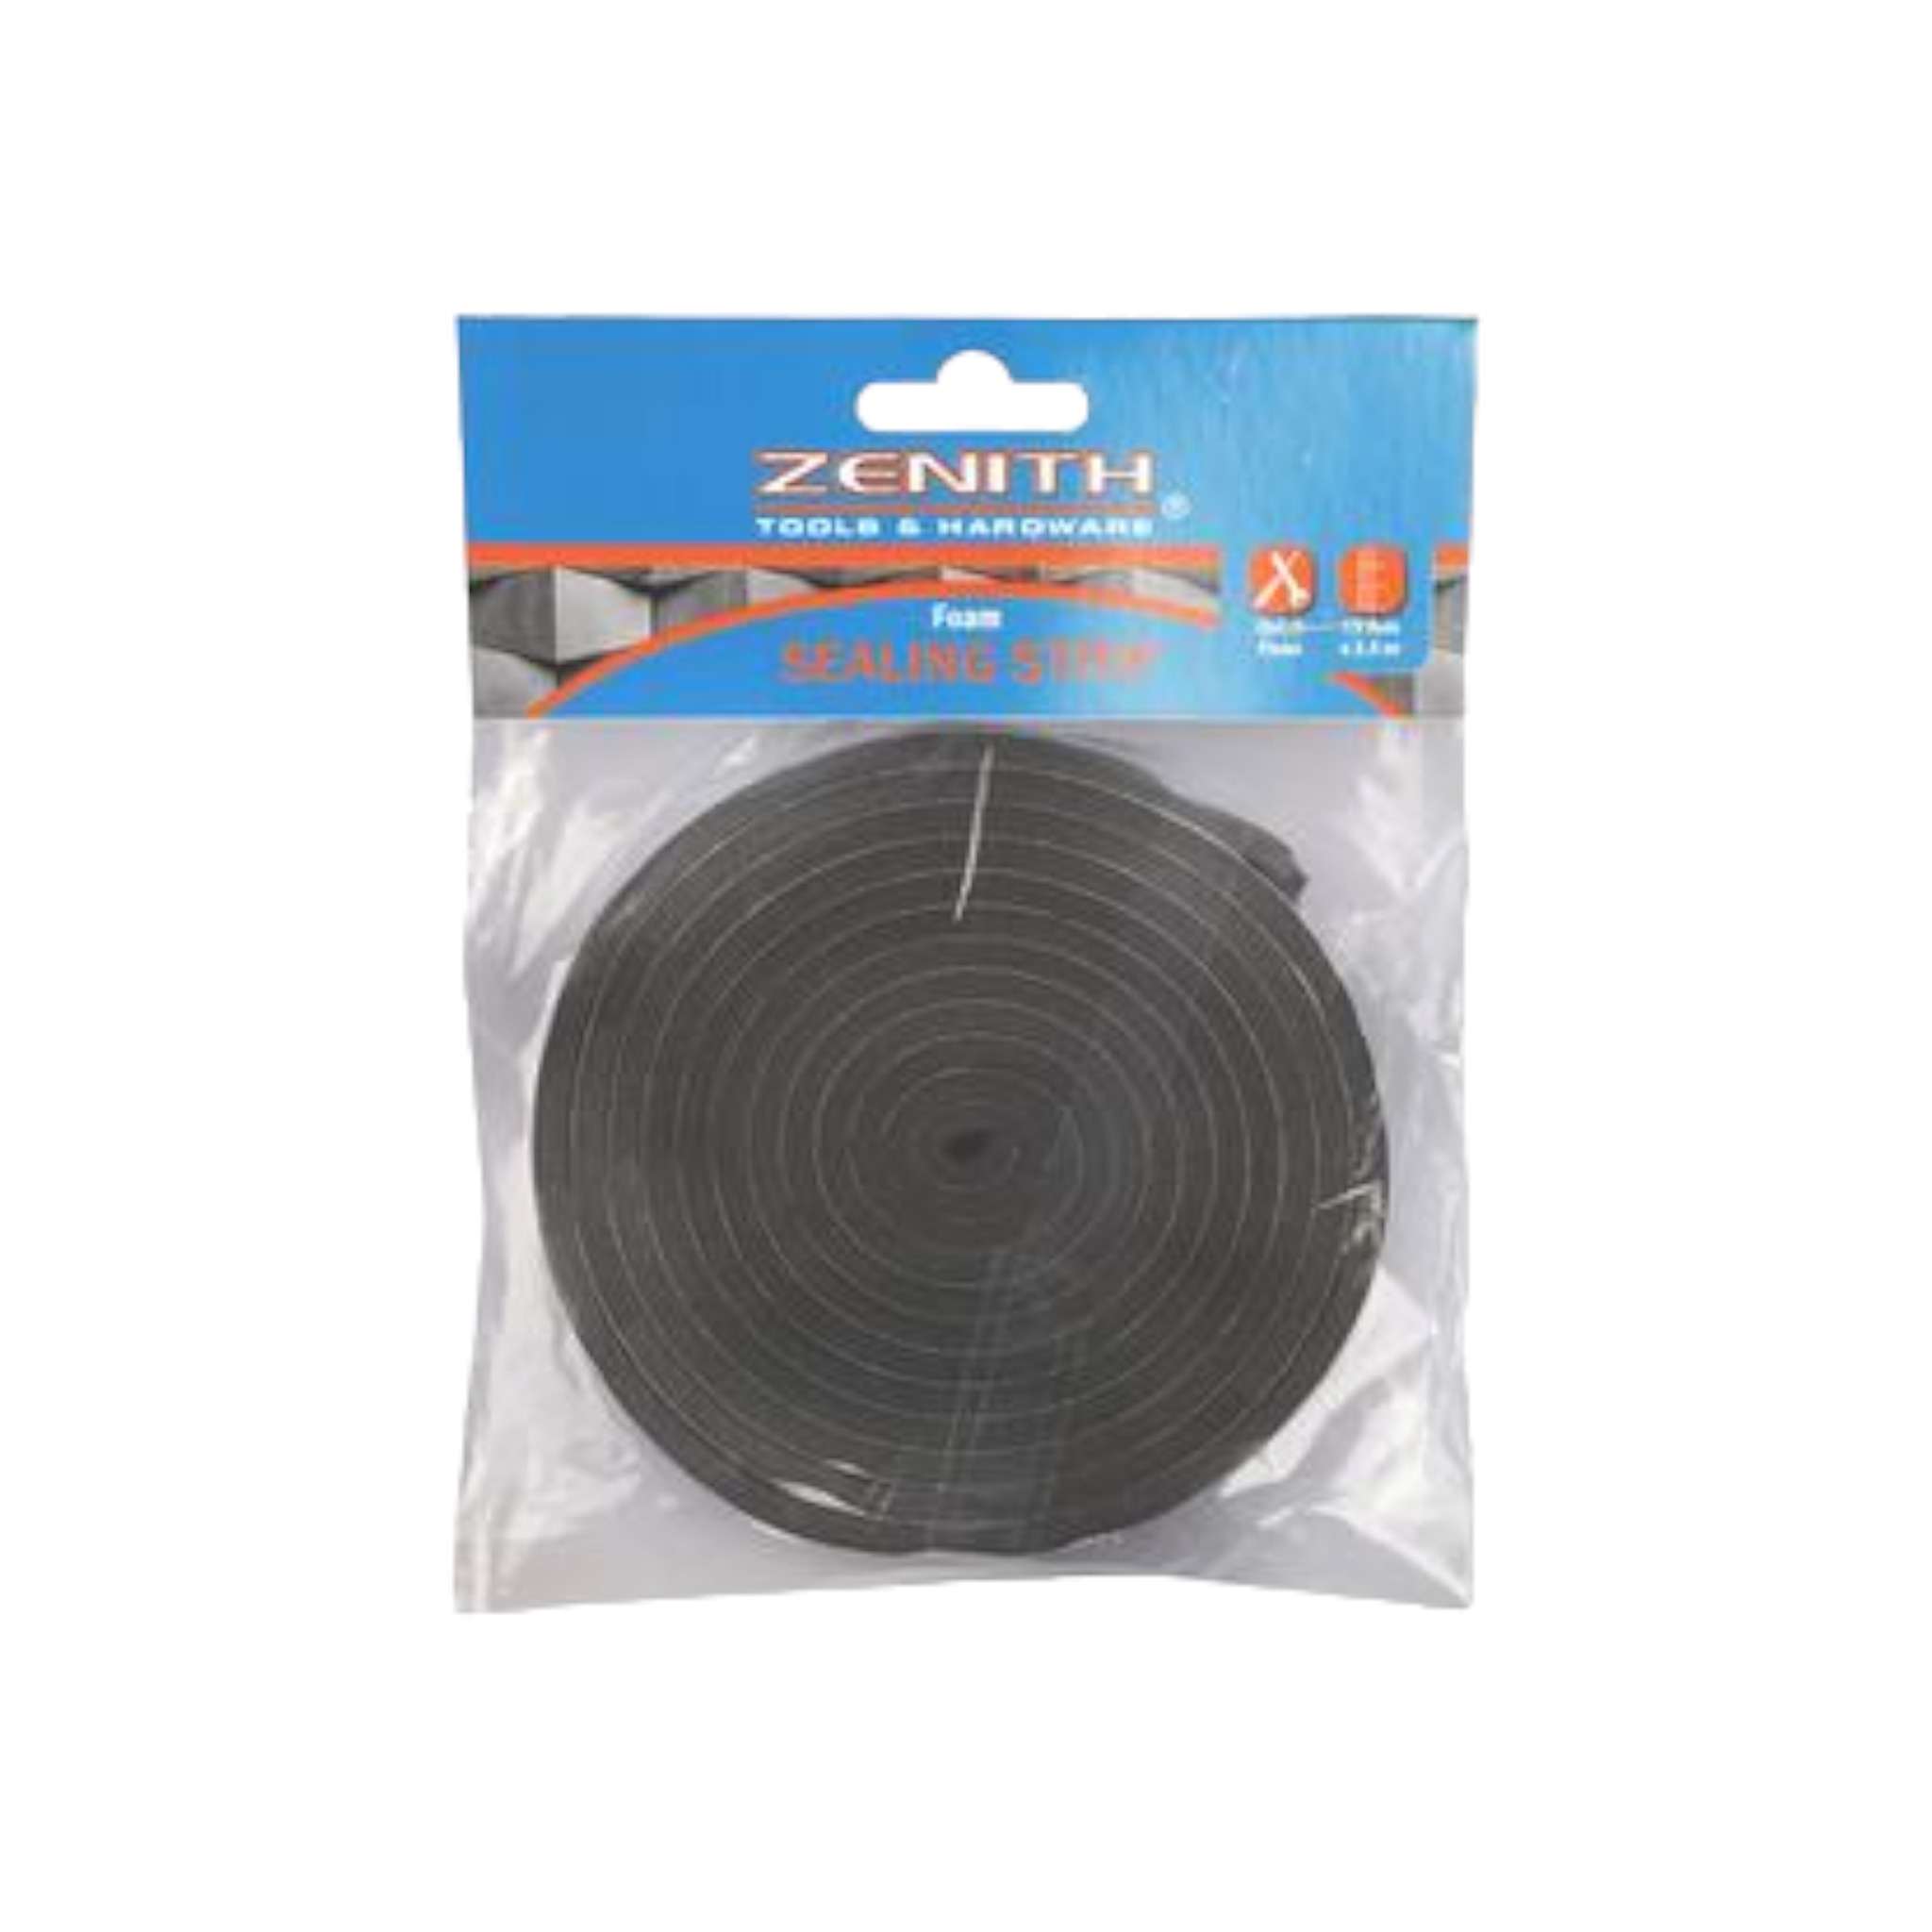 Zenith Foam Sealing Tape Strip 15mmx2.5m